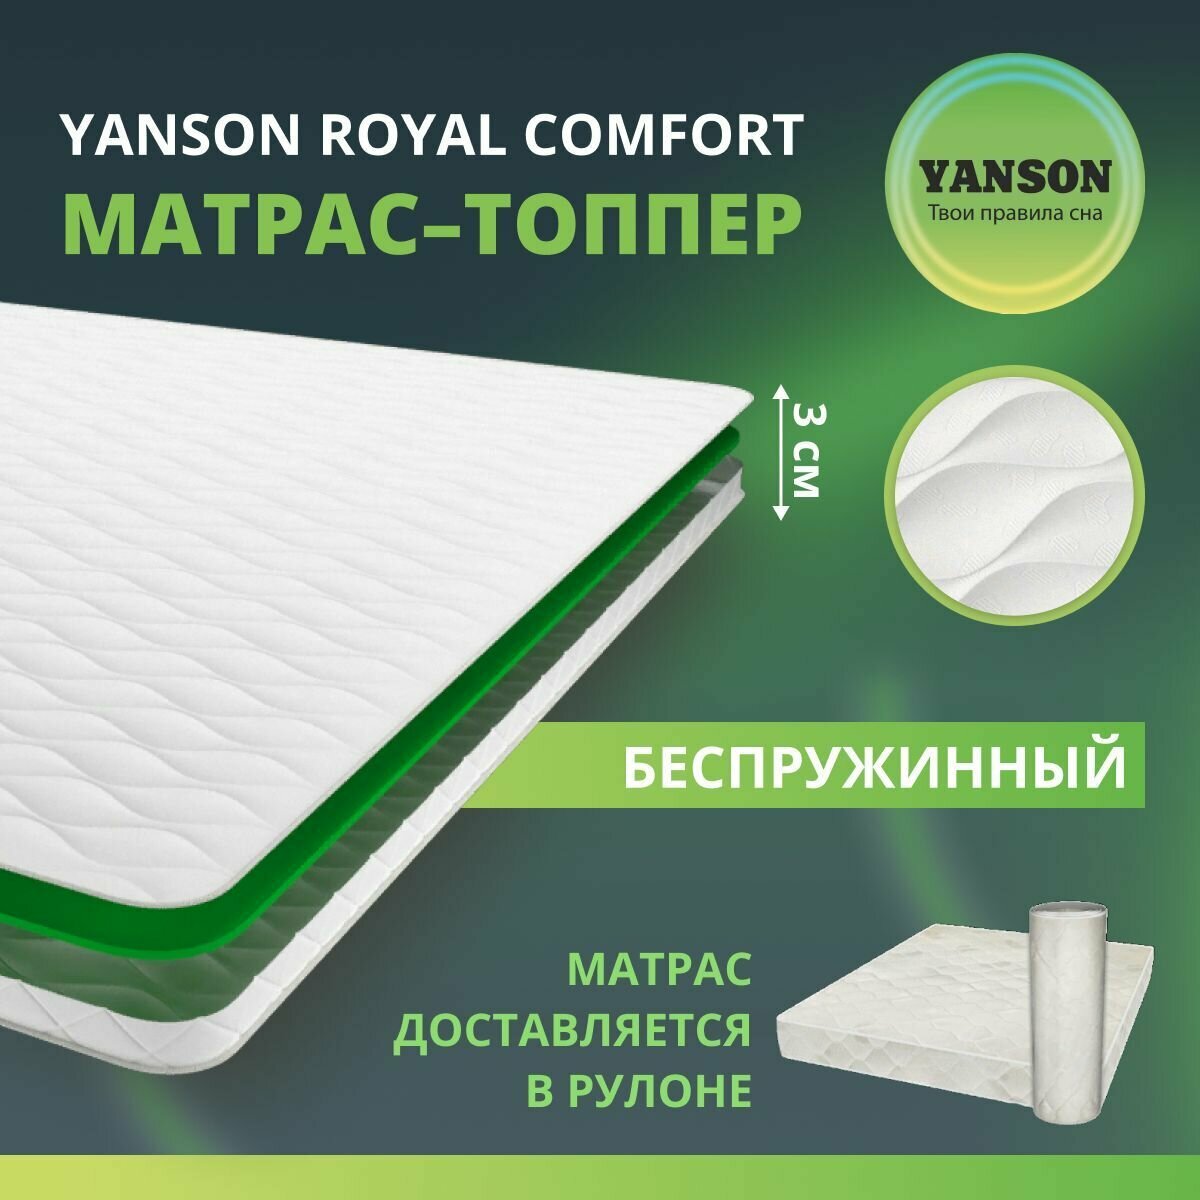 YANSON Royal Comfort 60-120